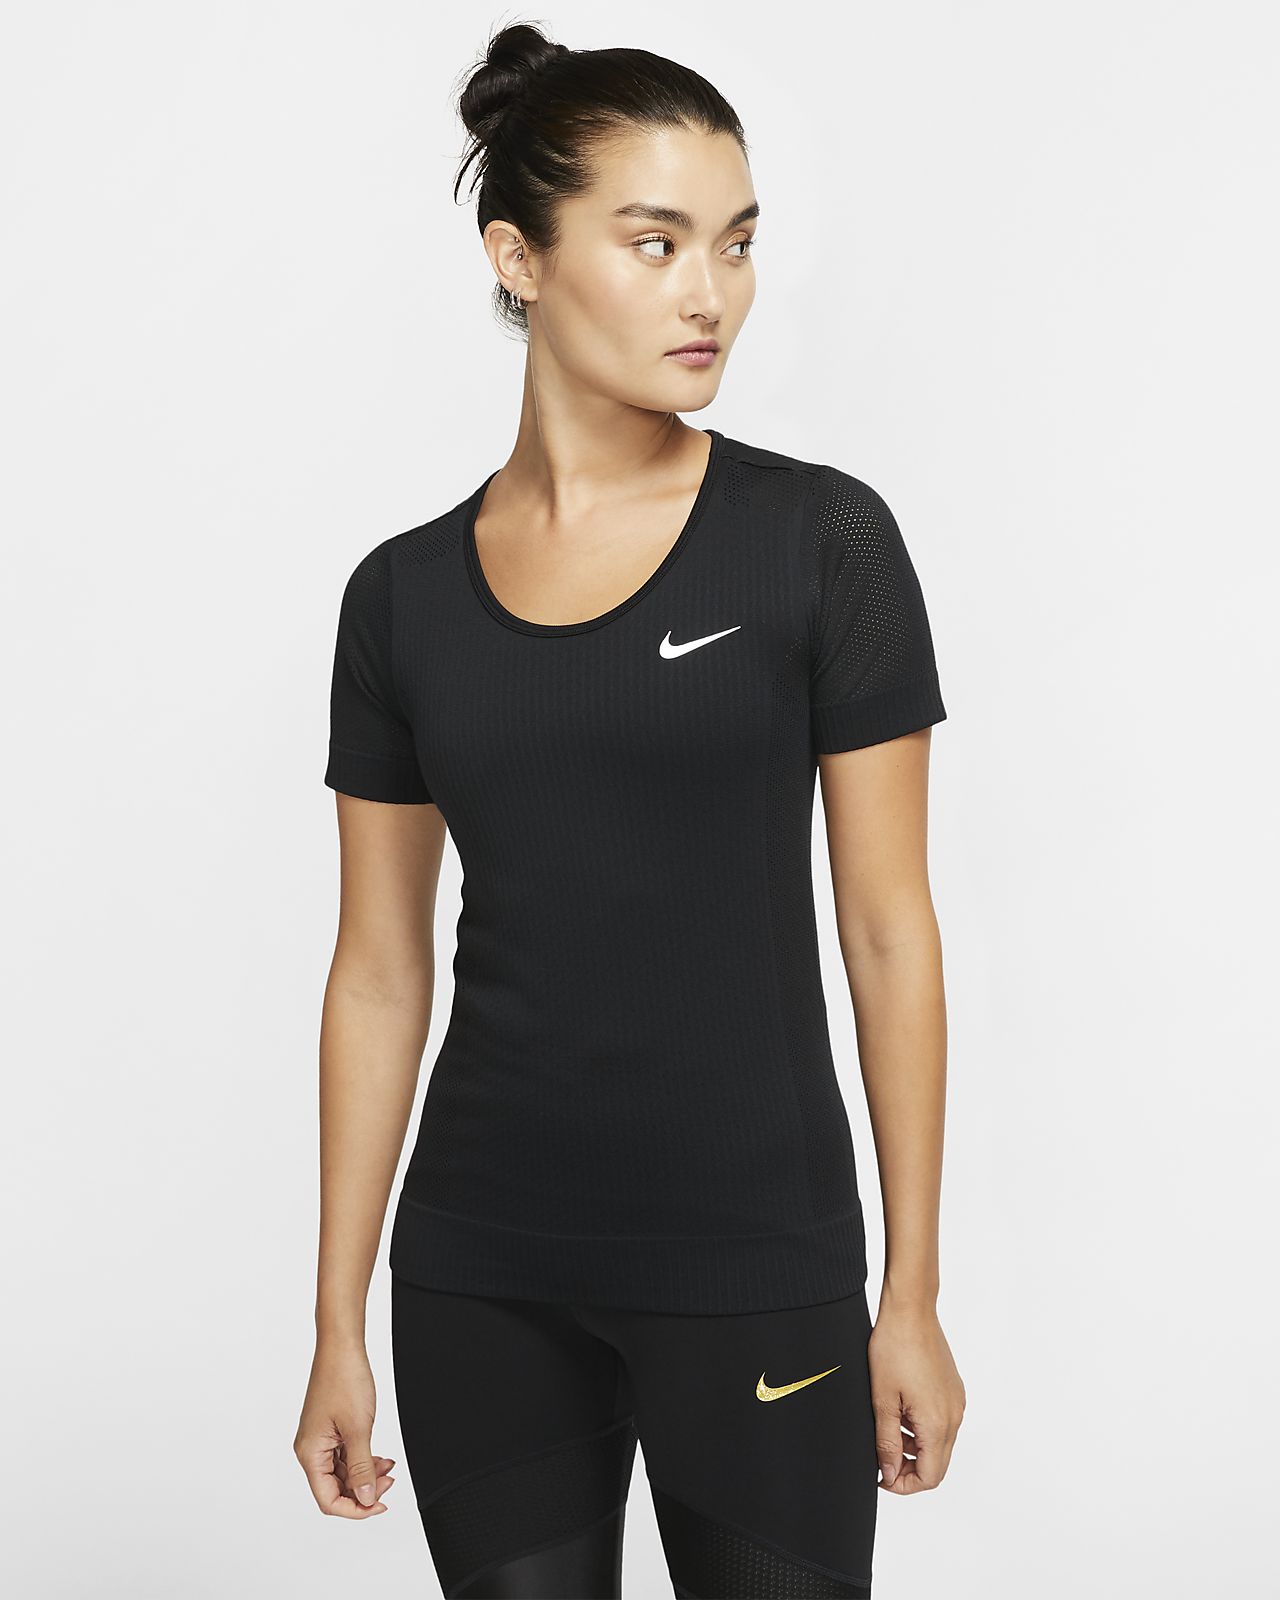 Short-Sleeve Running Top. Nike BG